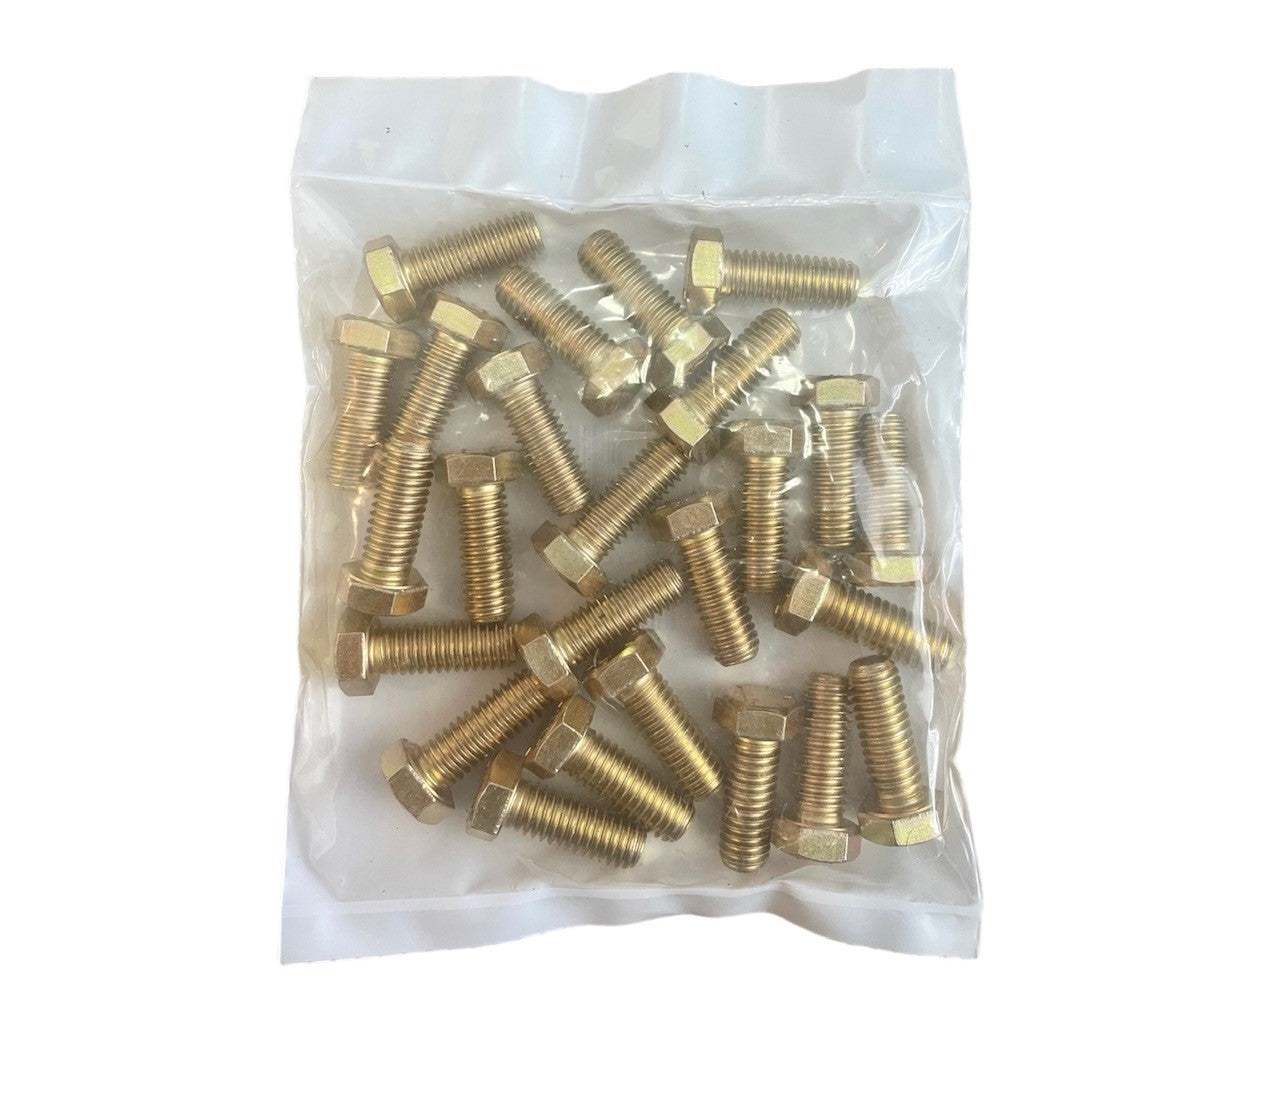 2,510 pcs Grade 8 Coarse Thread Nut Bolt & Washer Assortment Kit